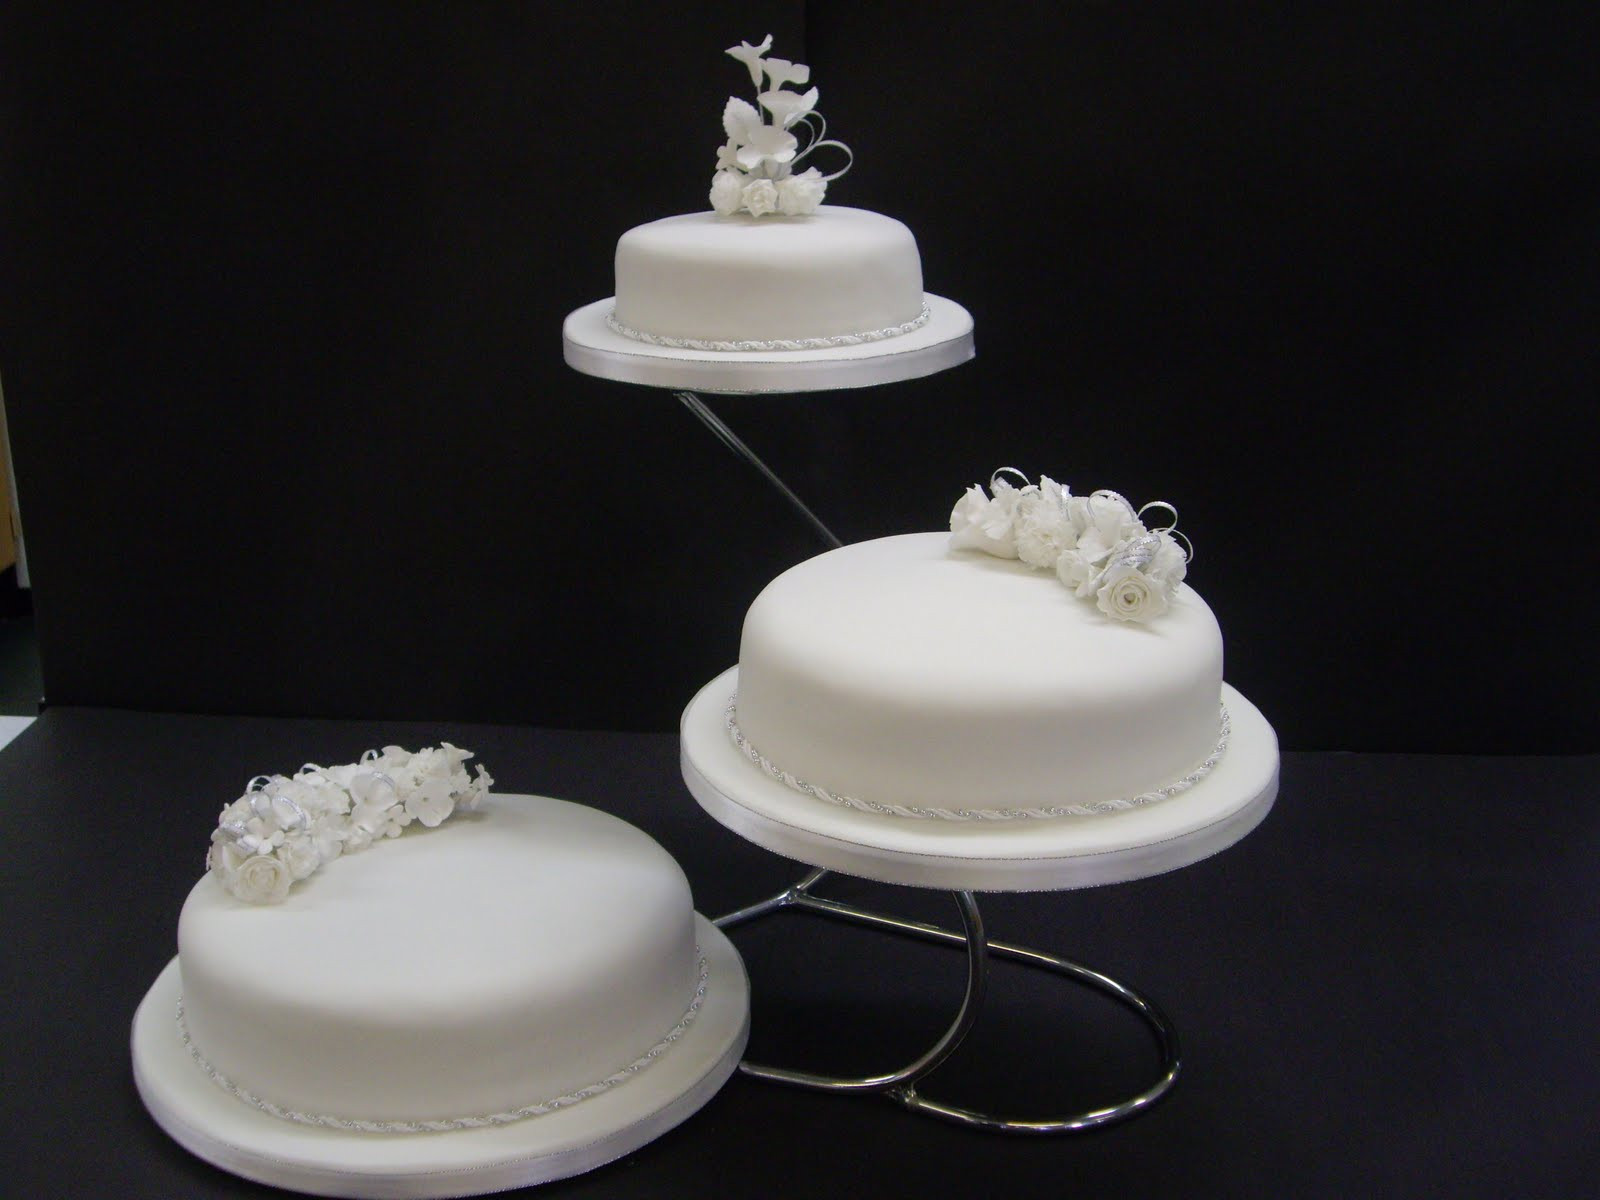 Simple 3 Tiered Wedding Cakes
 Simple 3 tier wedding cake idea in 2017